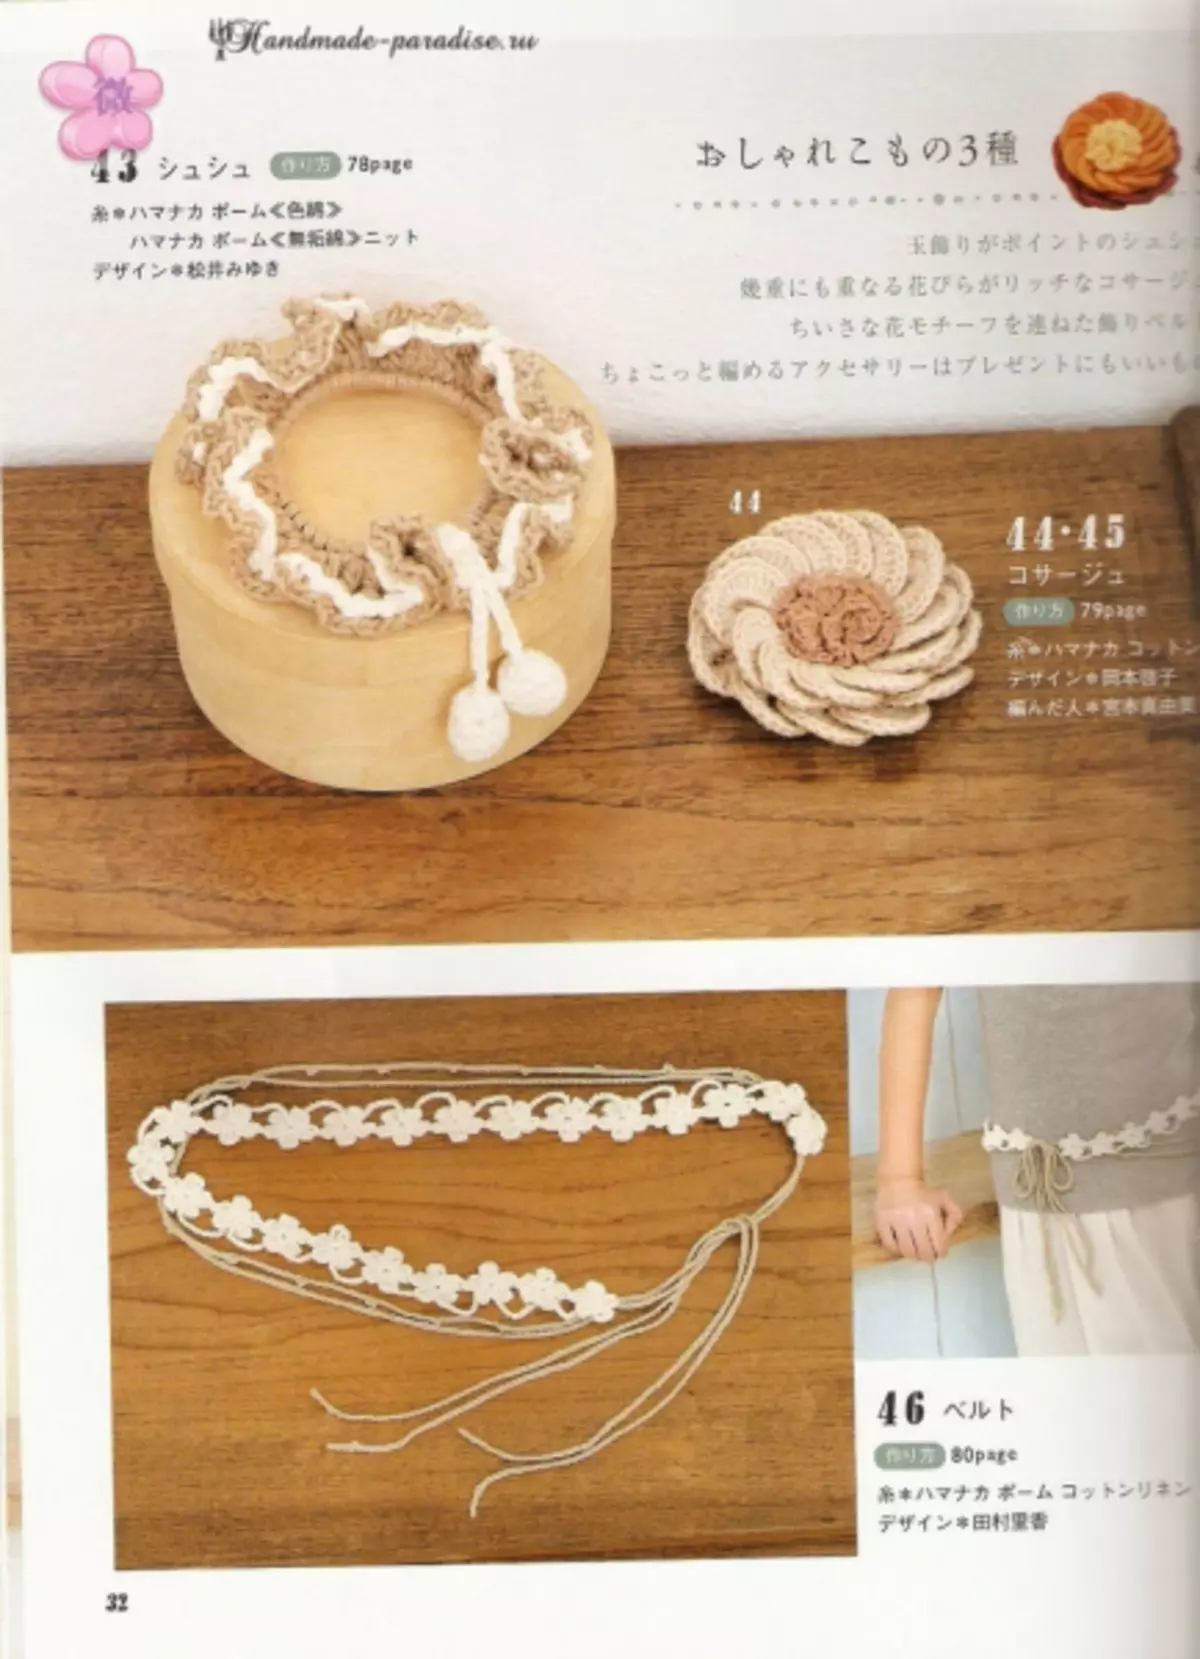 Crochet summer accessories. Japanese magazine na may mga scheme.